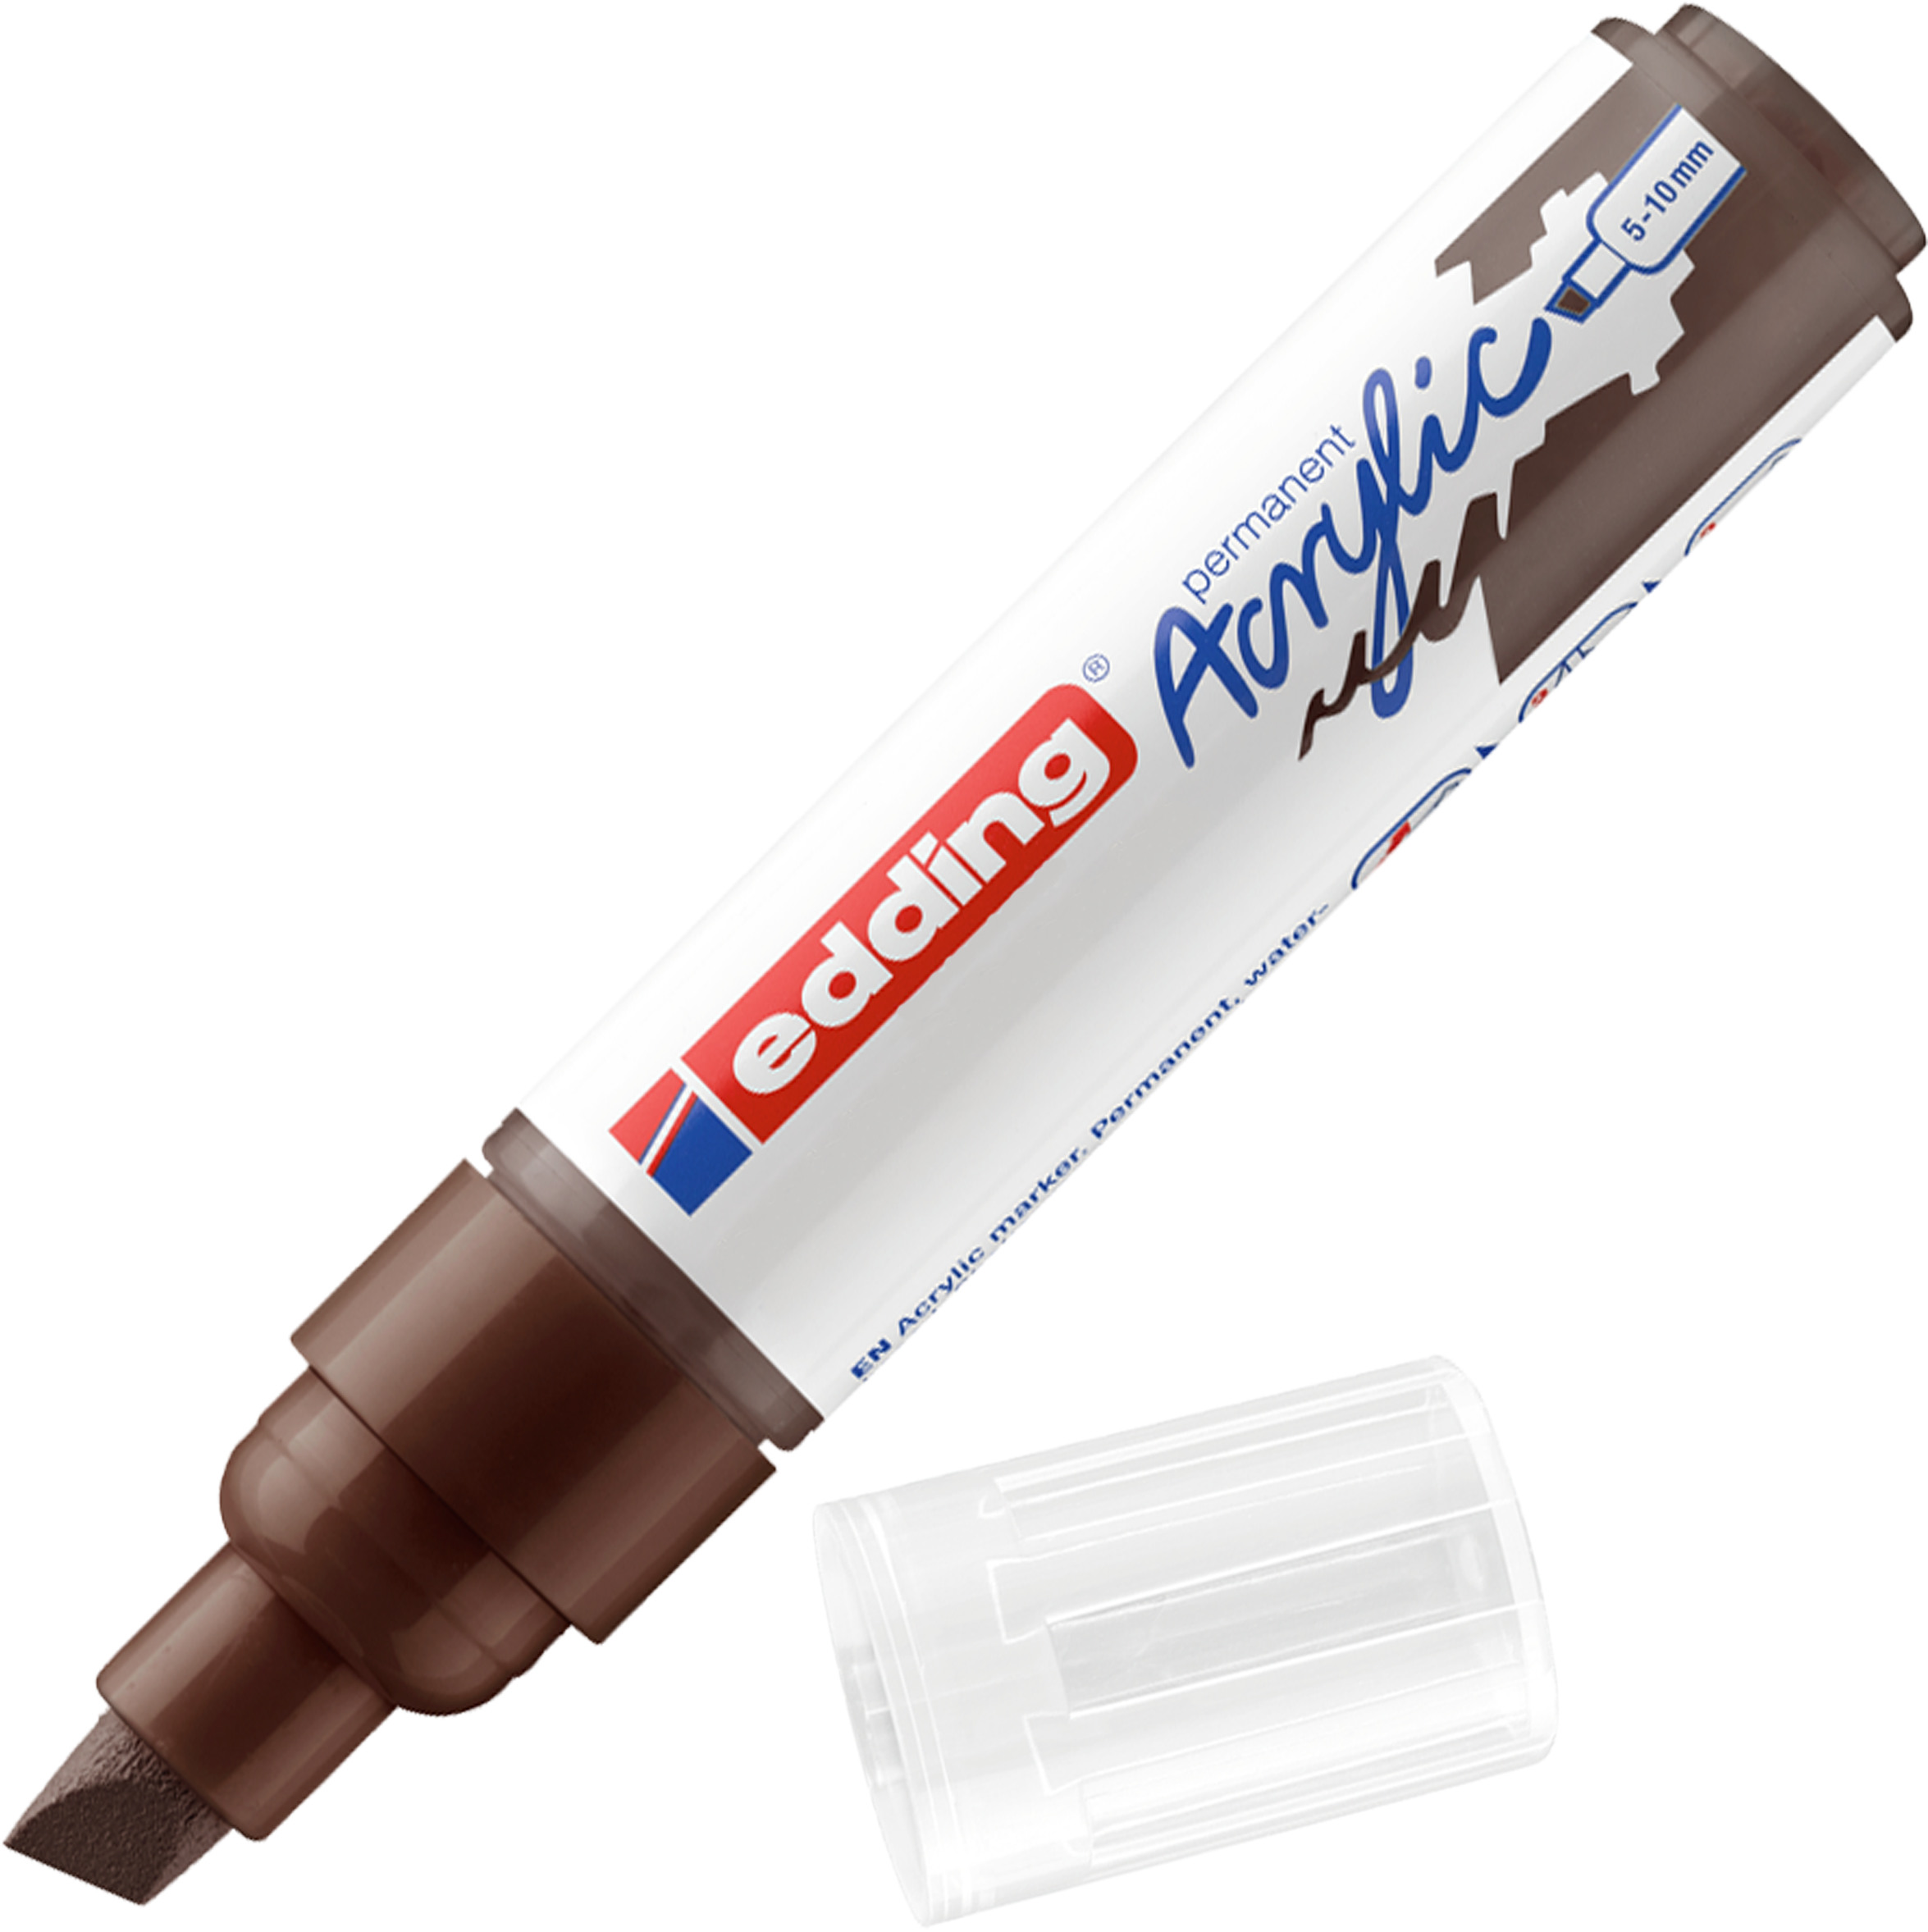 EDDING Acrylmarker 5000 5-10mm 5000-907 chocolate brown